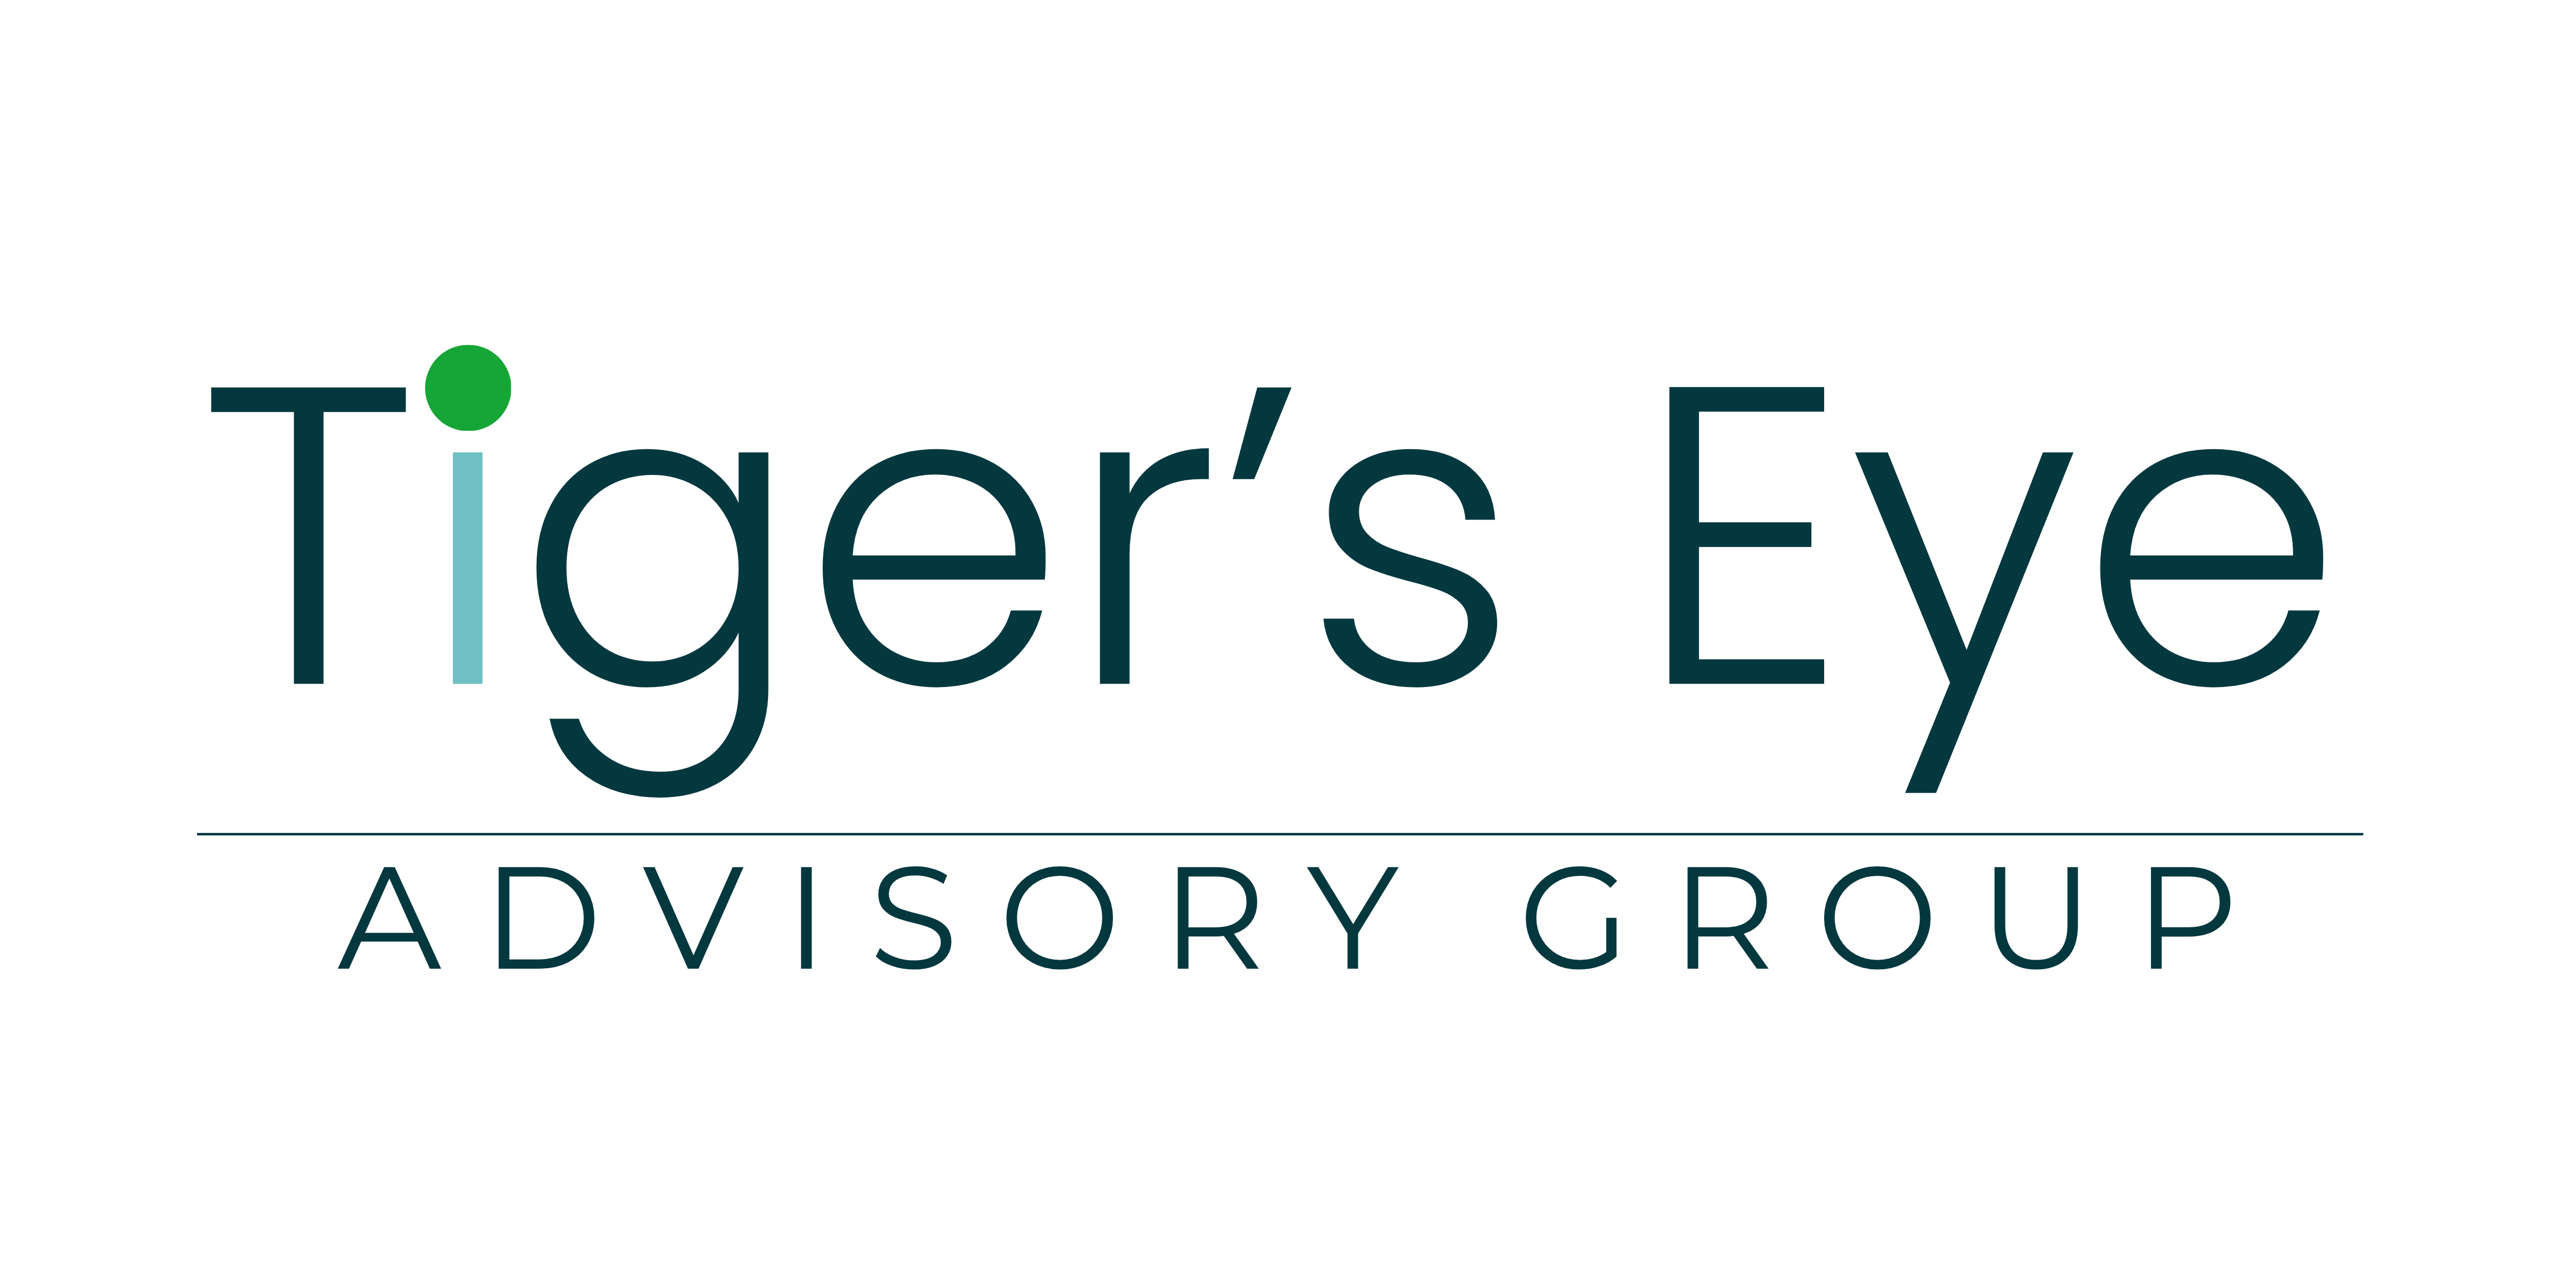 Tiger's Eye Advisory Group